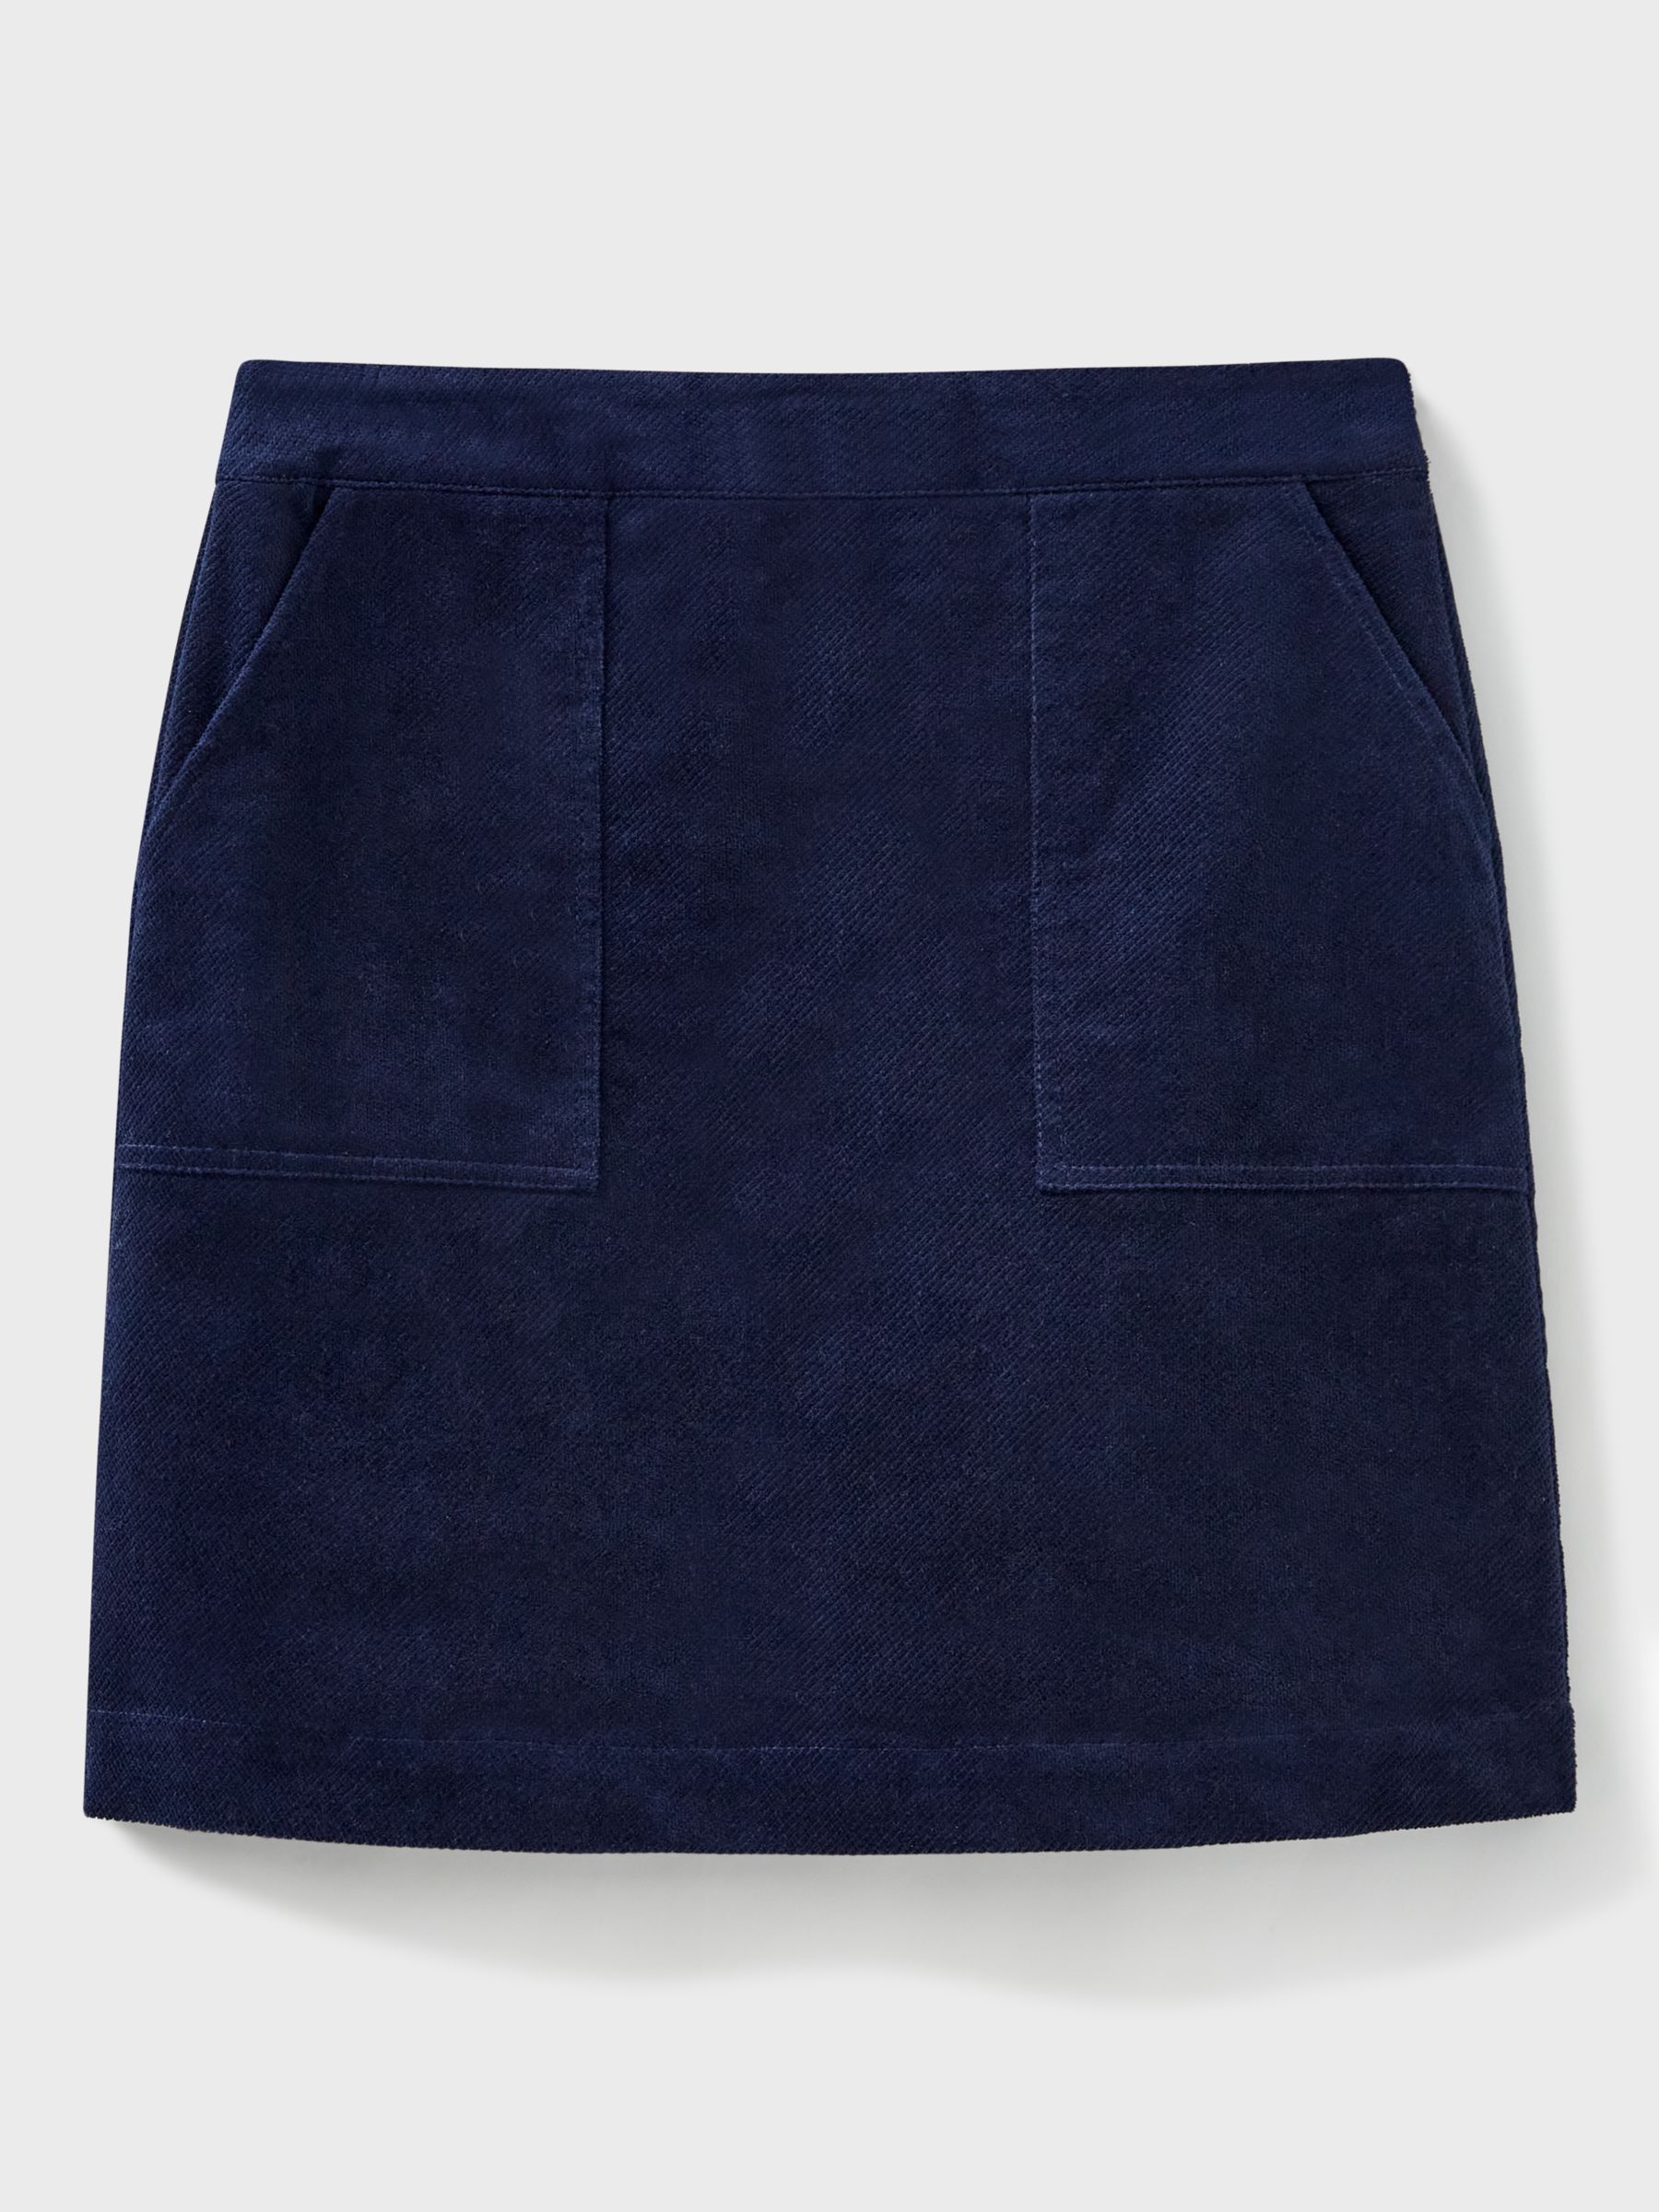 Crew Clothing Alice Corduroy A-Line Skirt, Dark Blue at John Lewis ...